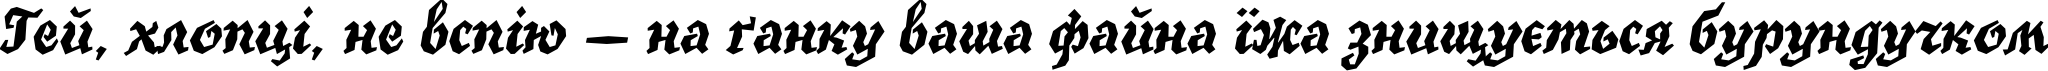 Пример написания шрифтом TrueGritITC текста на украинском